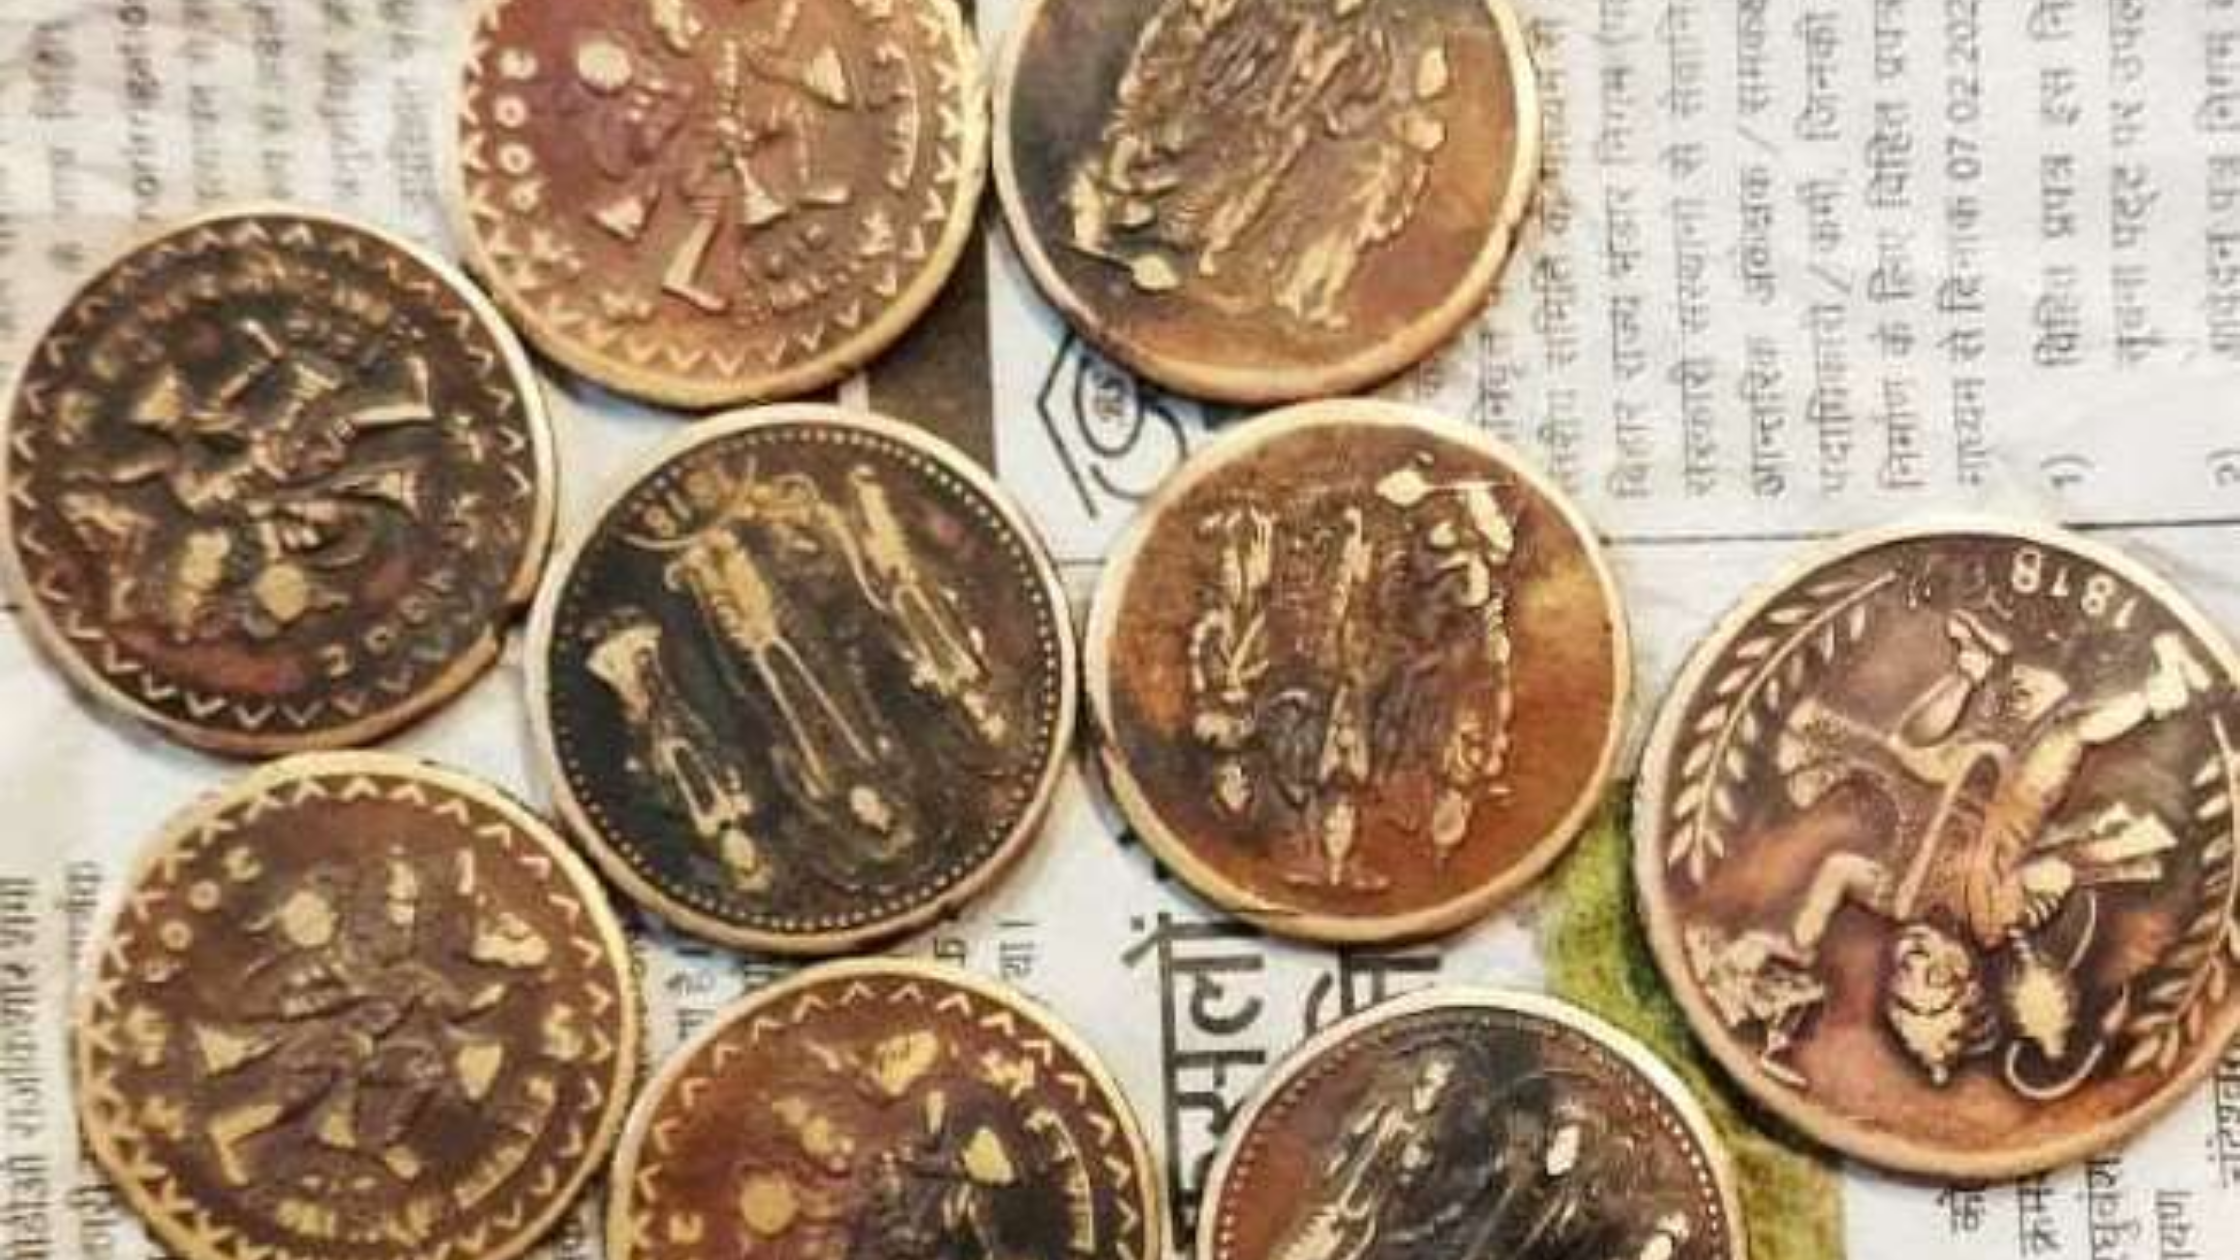 rare gold coins found in araria